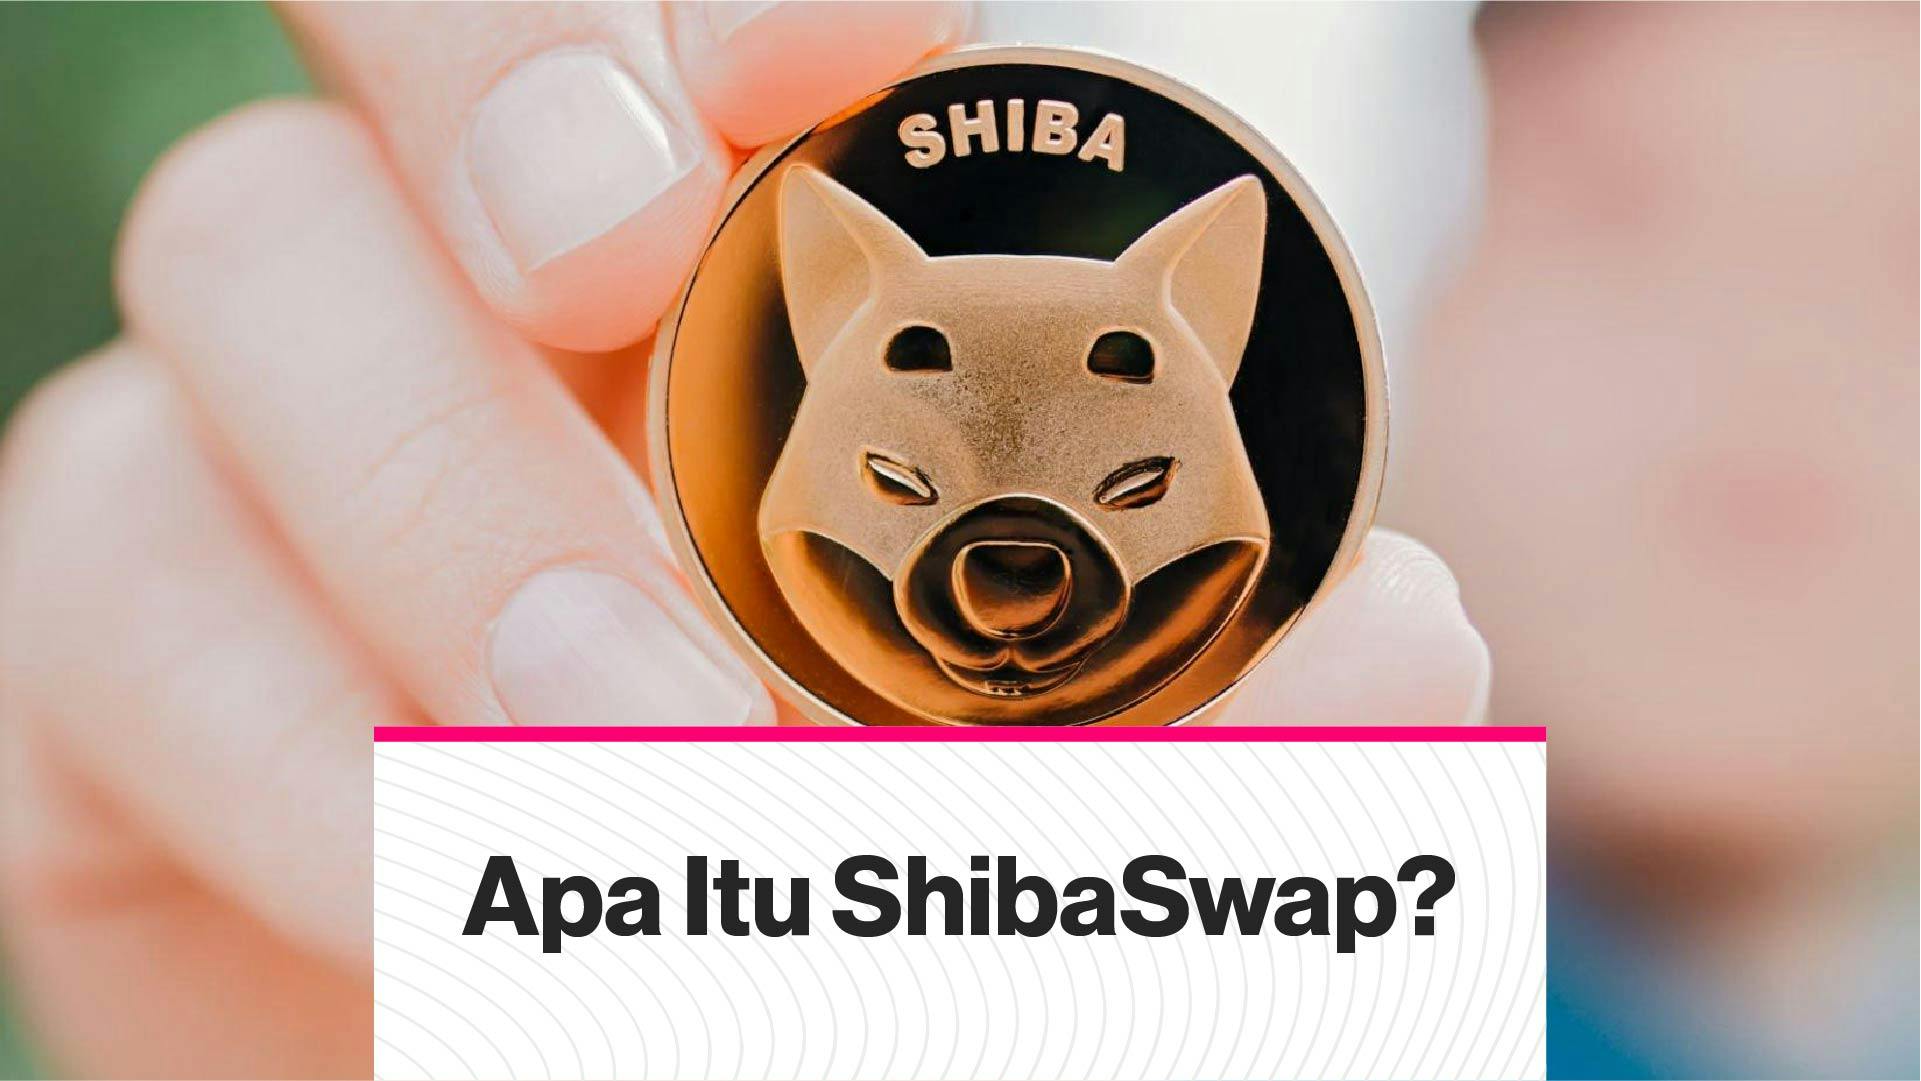 Apa Itu ShibaSwap? (Coindesk Indonesia)